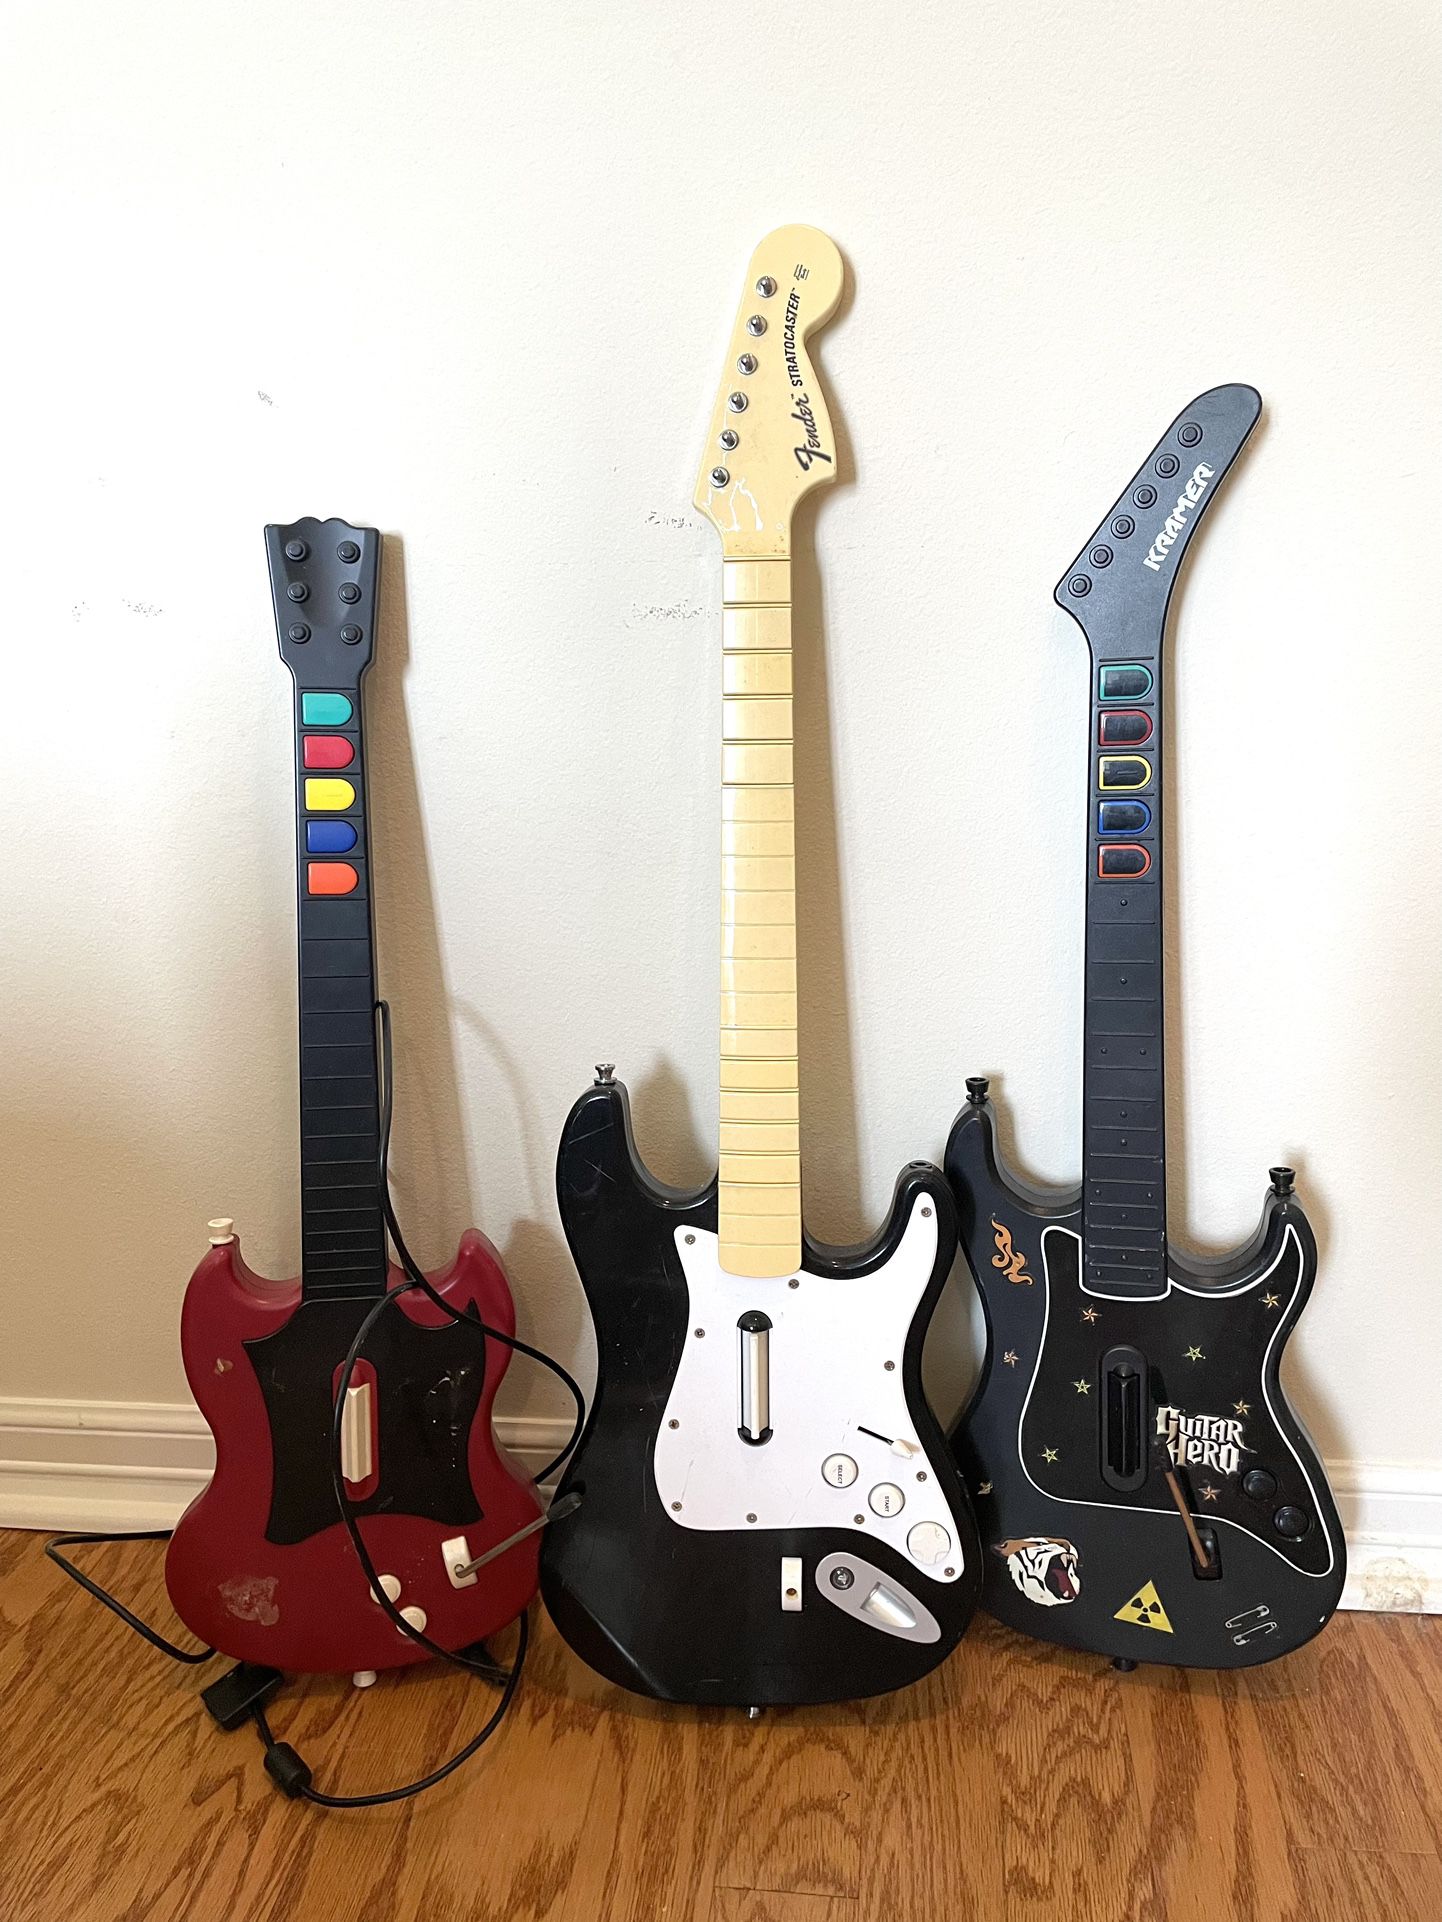 Guitar Hero Guitars / Kramer / Fender Stratocaster / Playstation / PS2 